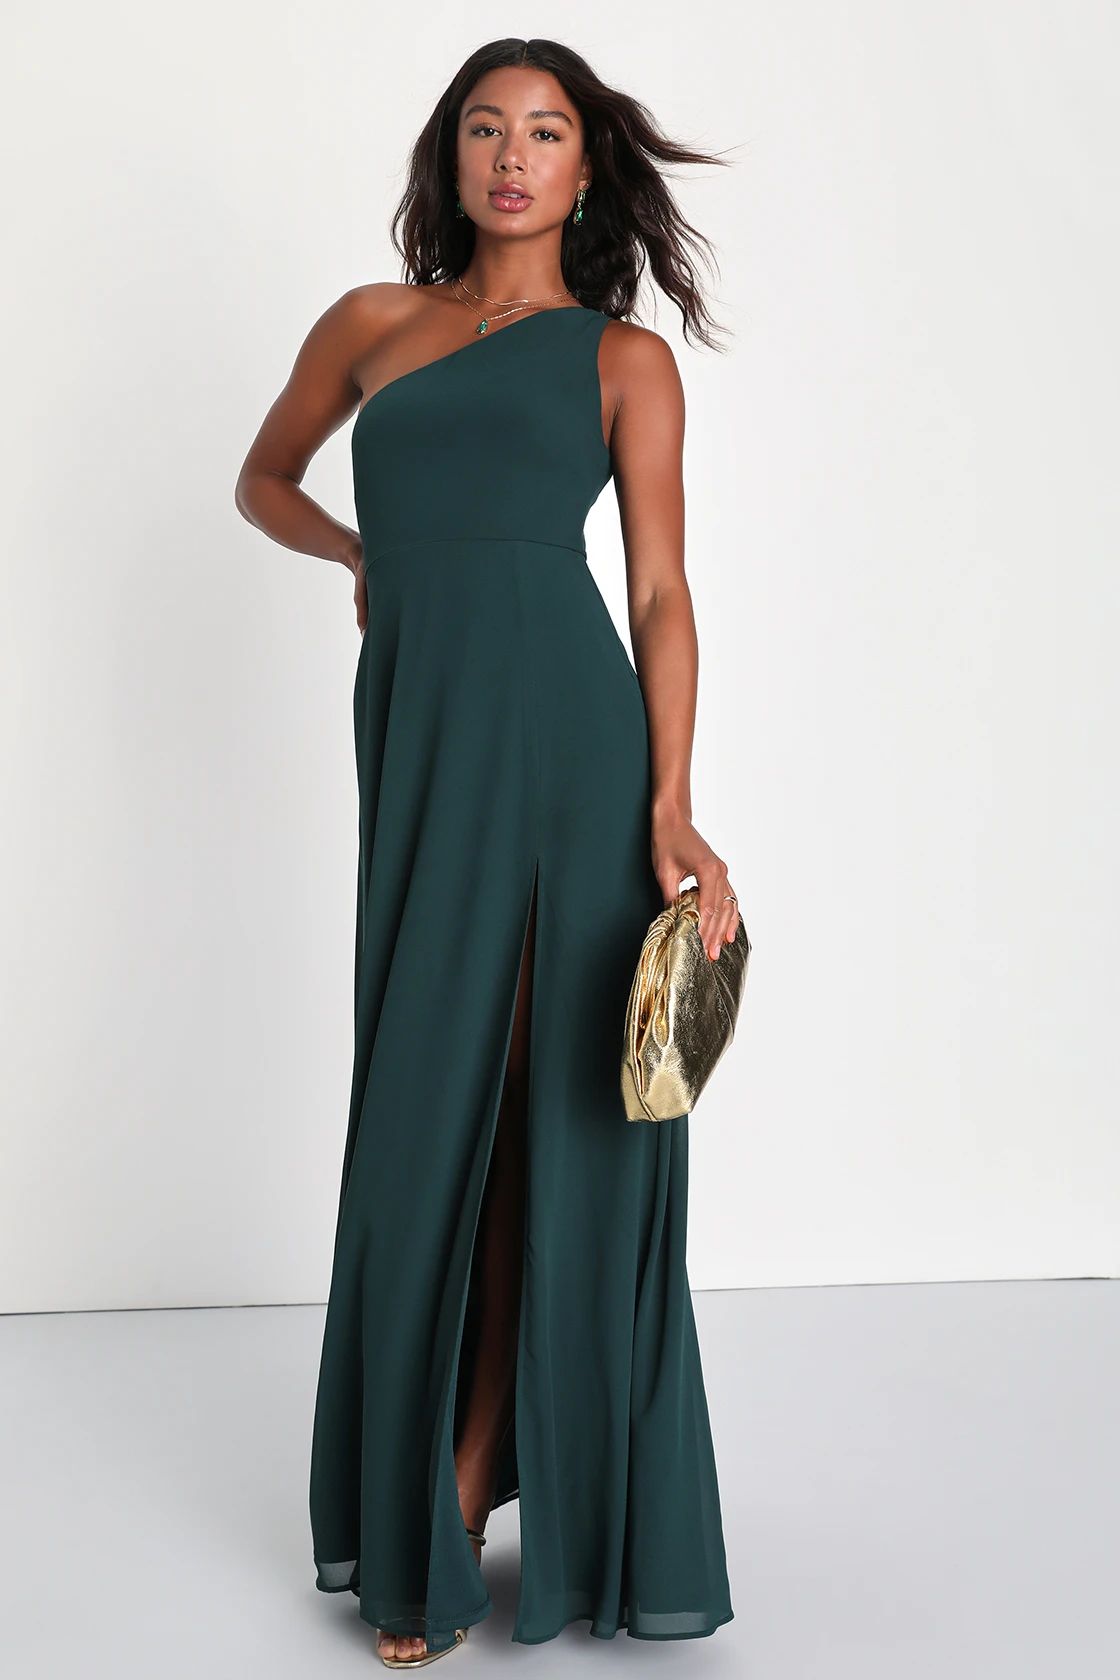 Elegant Admiration Emerald Green One-Shoulder Maxi Dress | Lulus